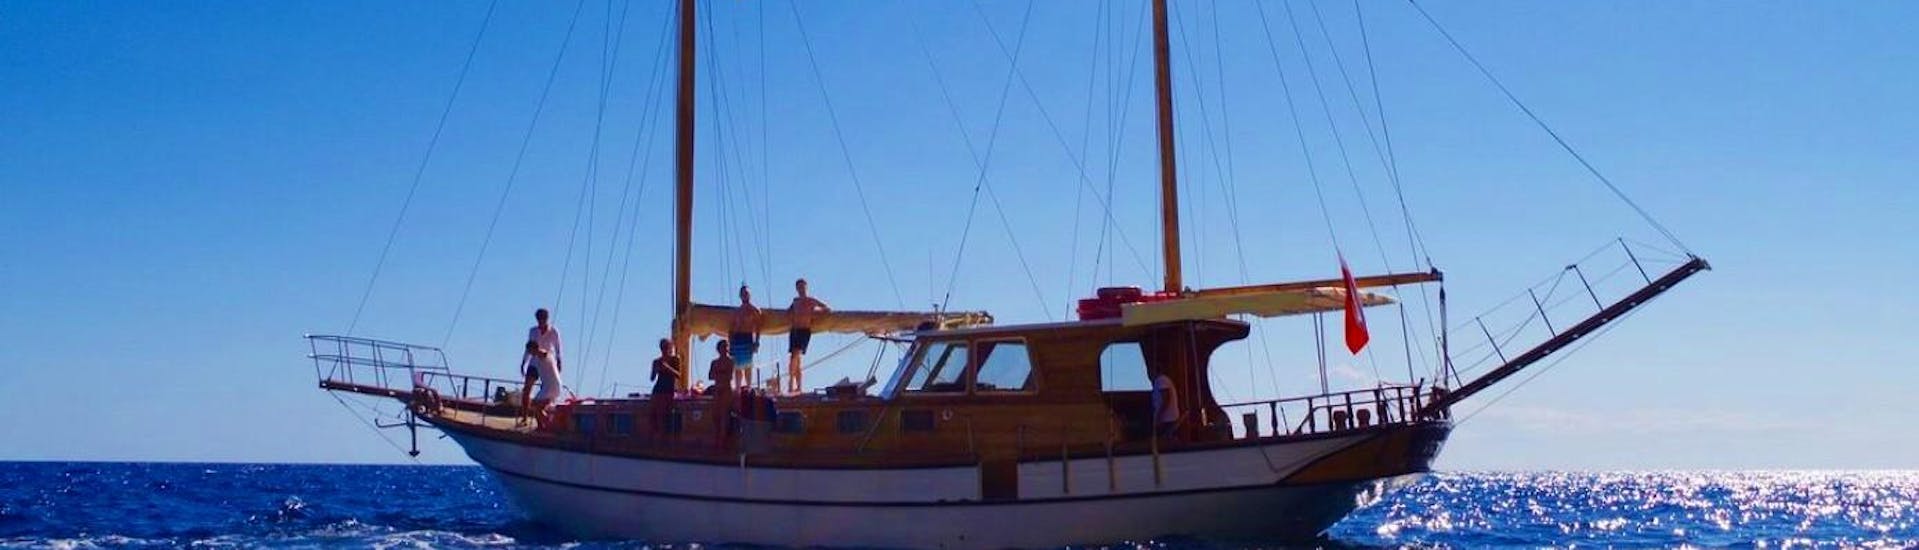 The elegant Veliero Kontes Gemma schooner in the open sea during a private trip along the Gulf of Orosei.